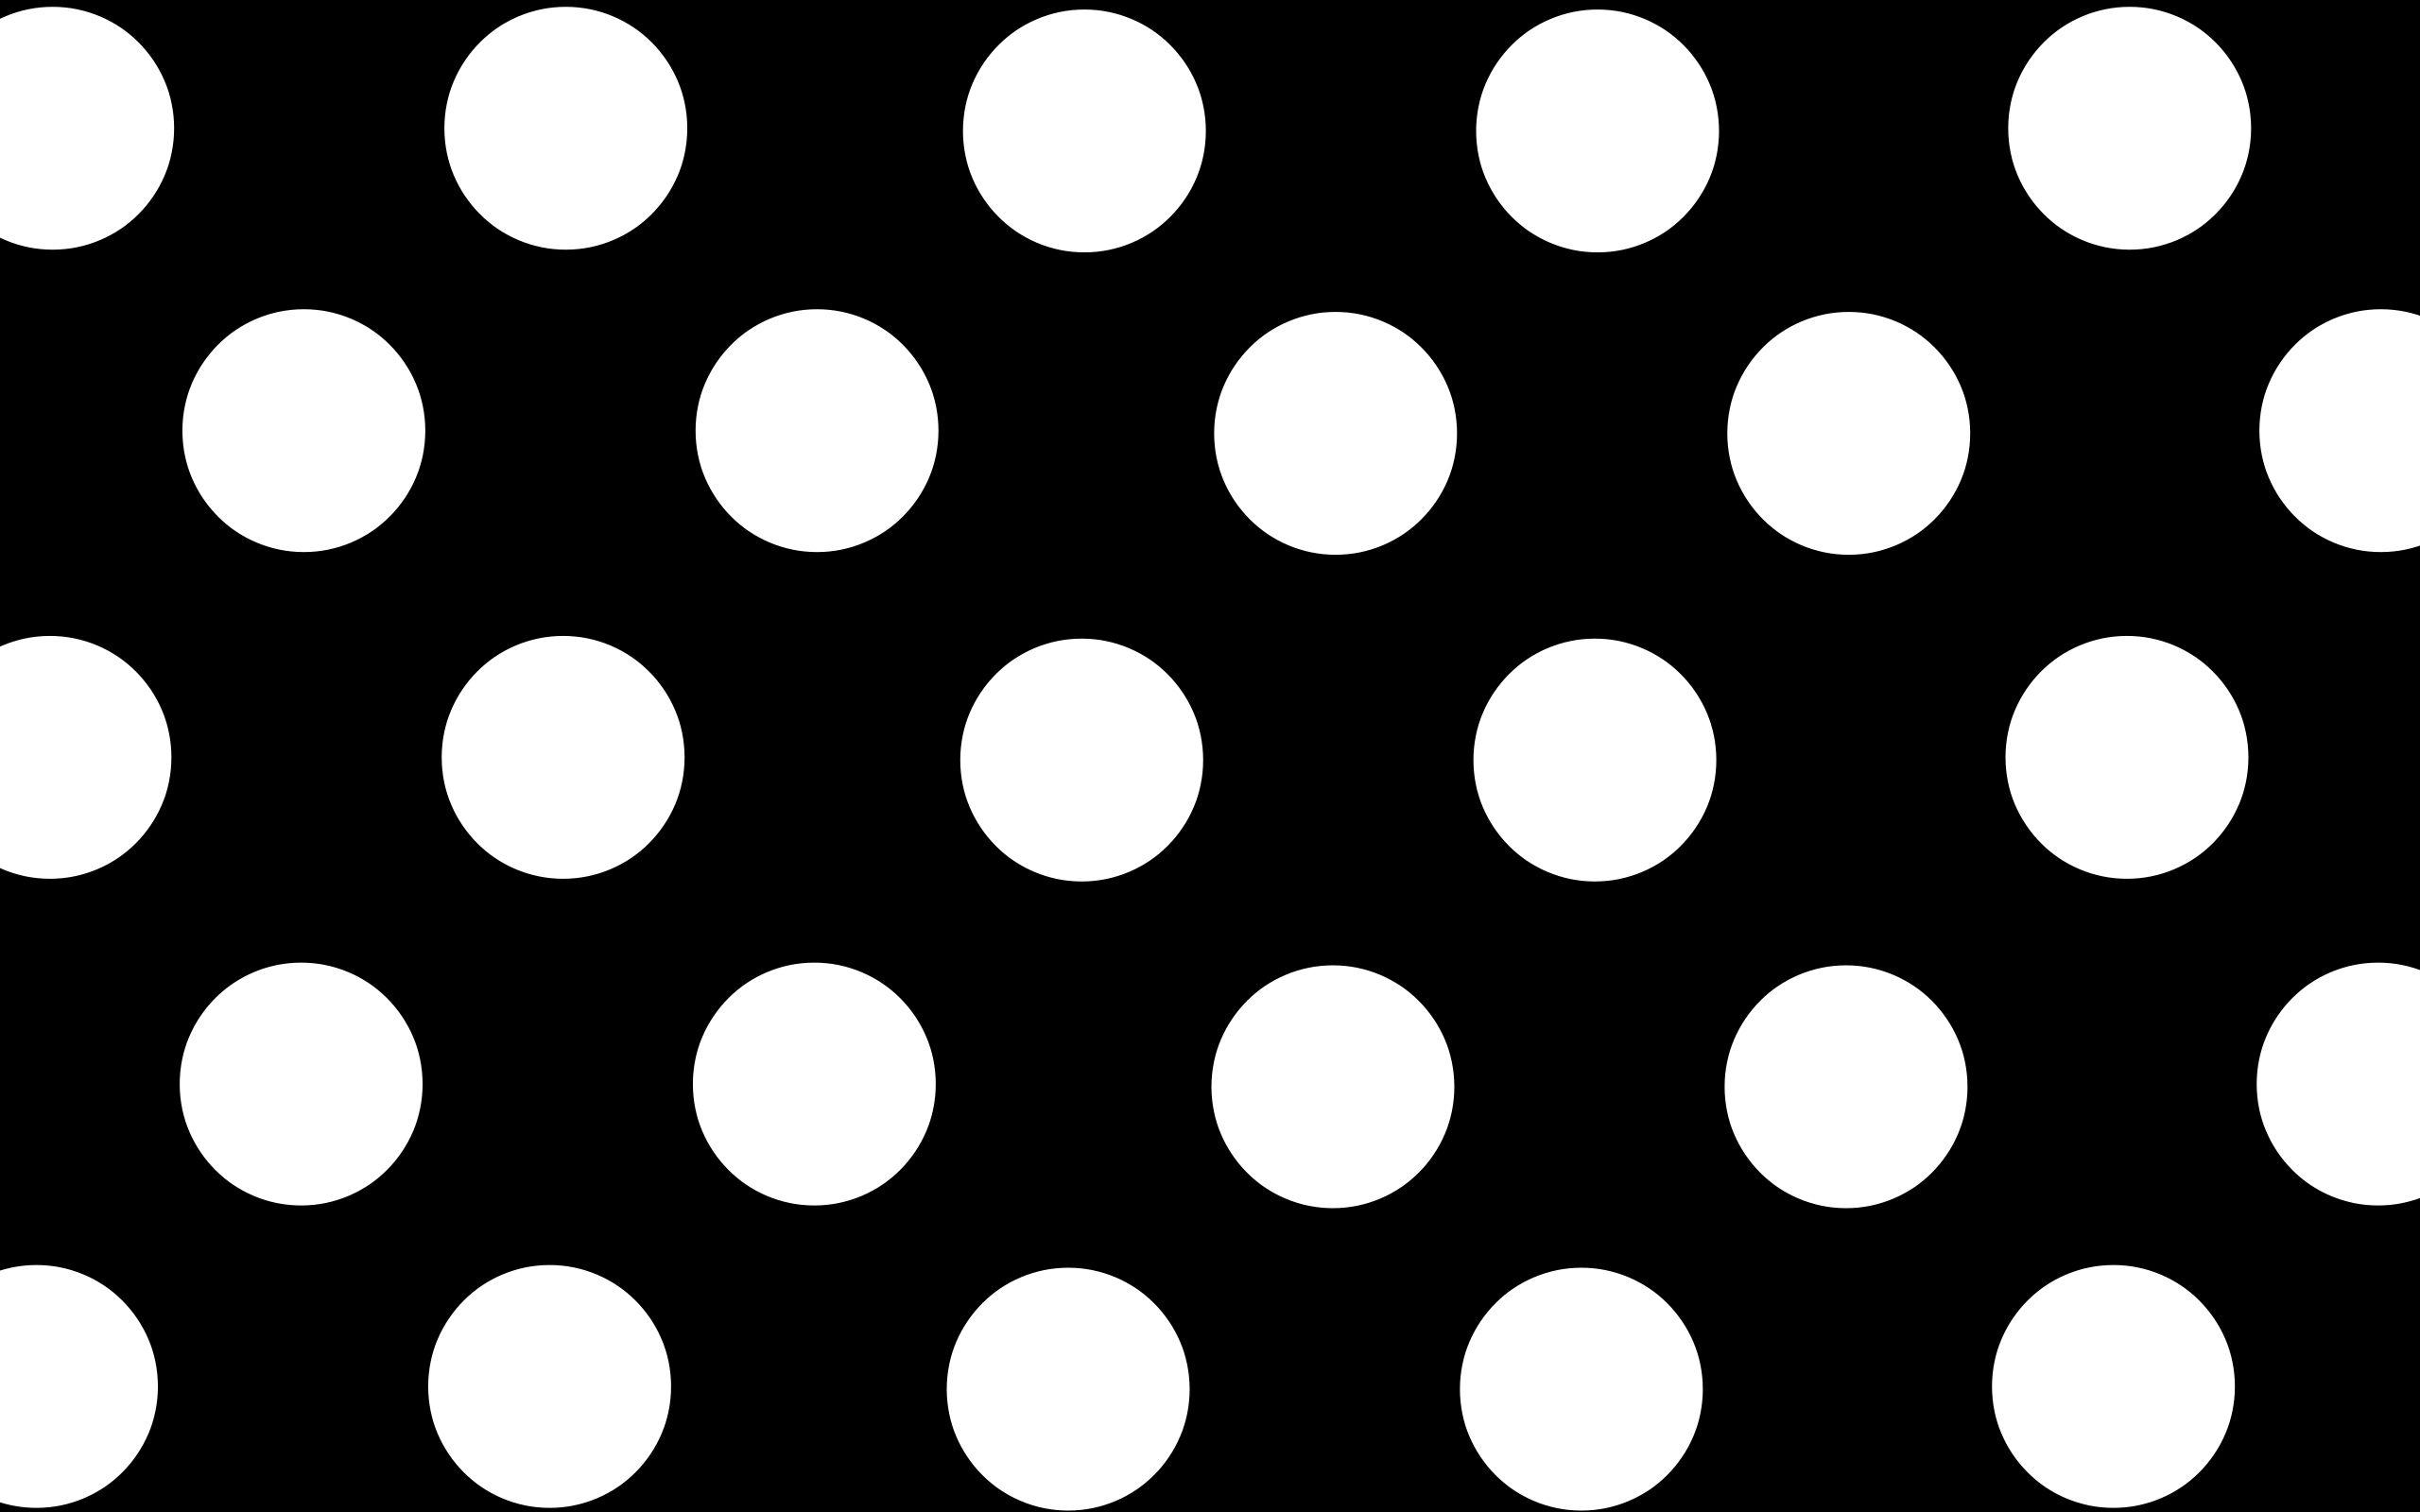 polka dot backgrounds for desktop